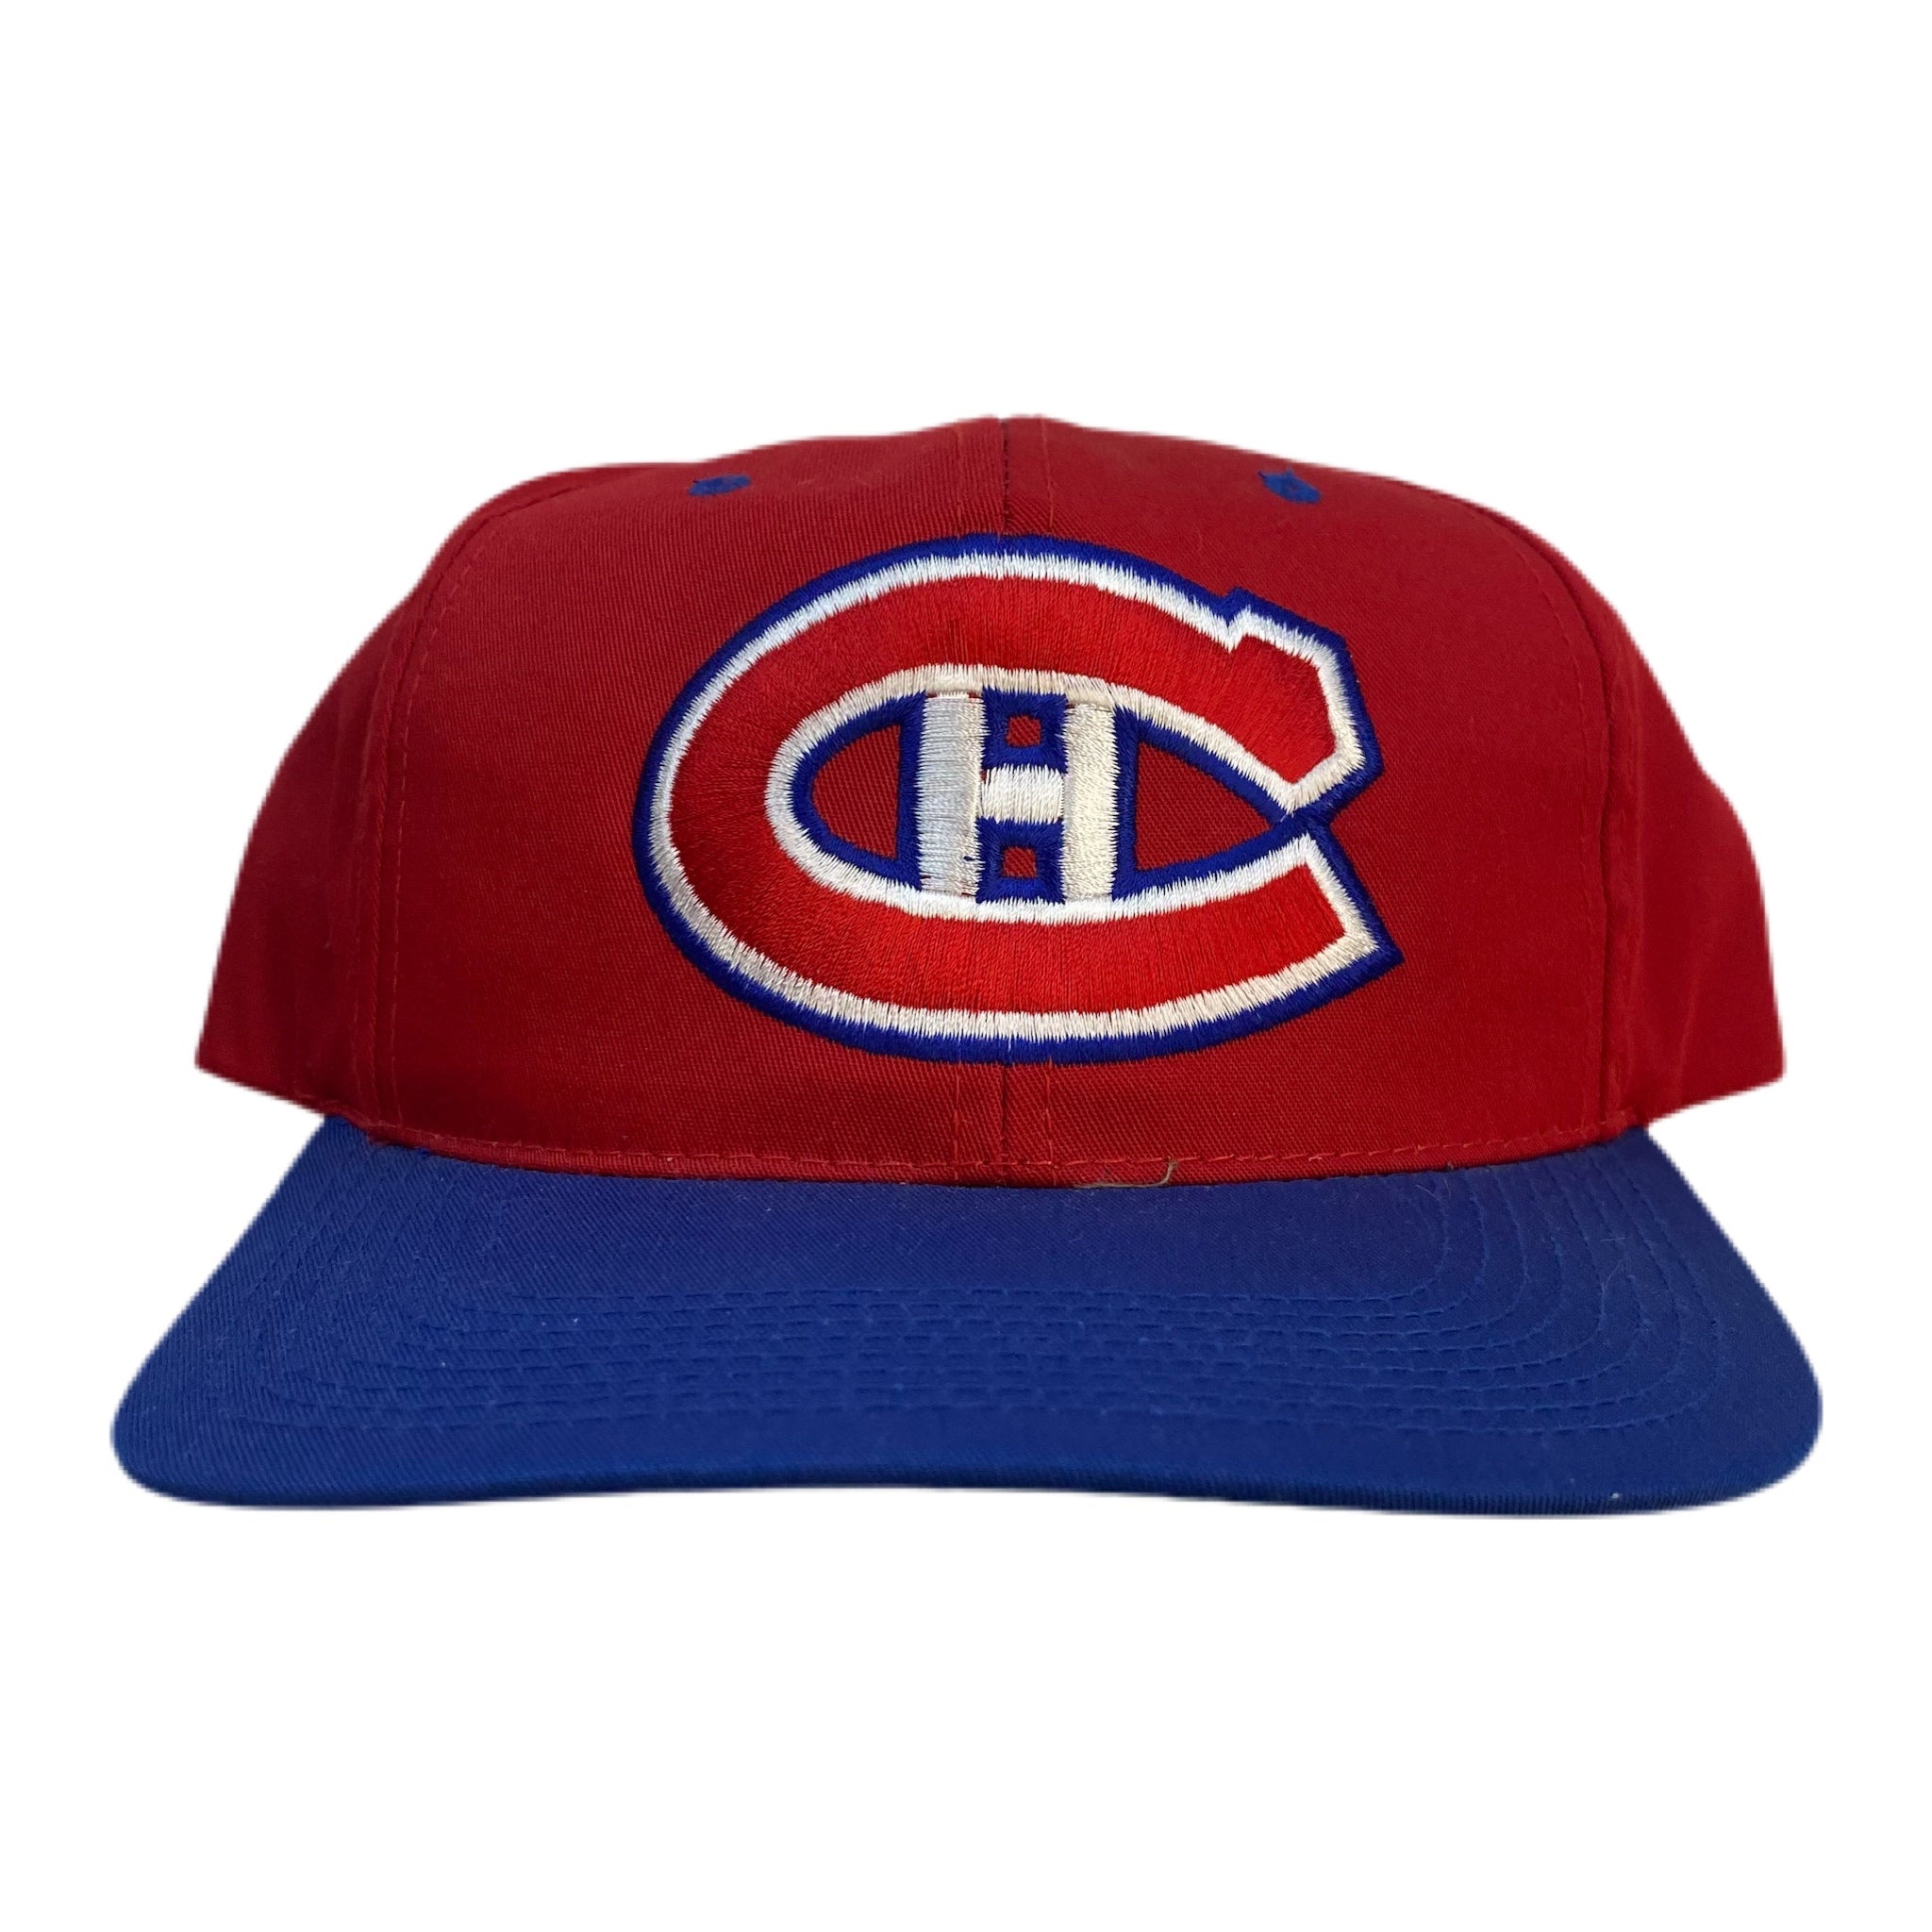 Vintage Montreal Canadiens Hat Red